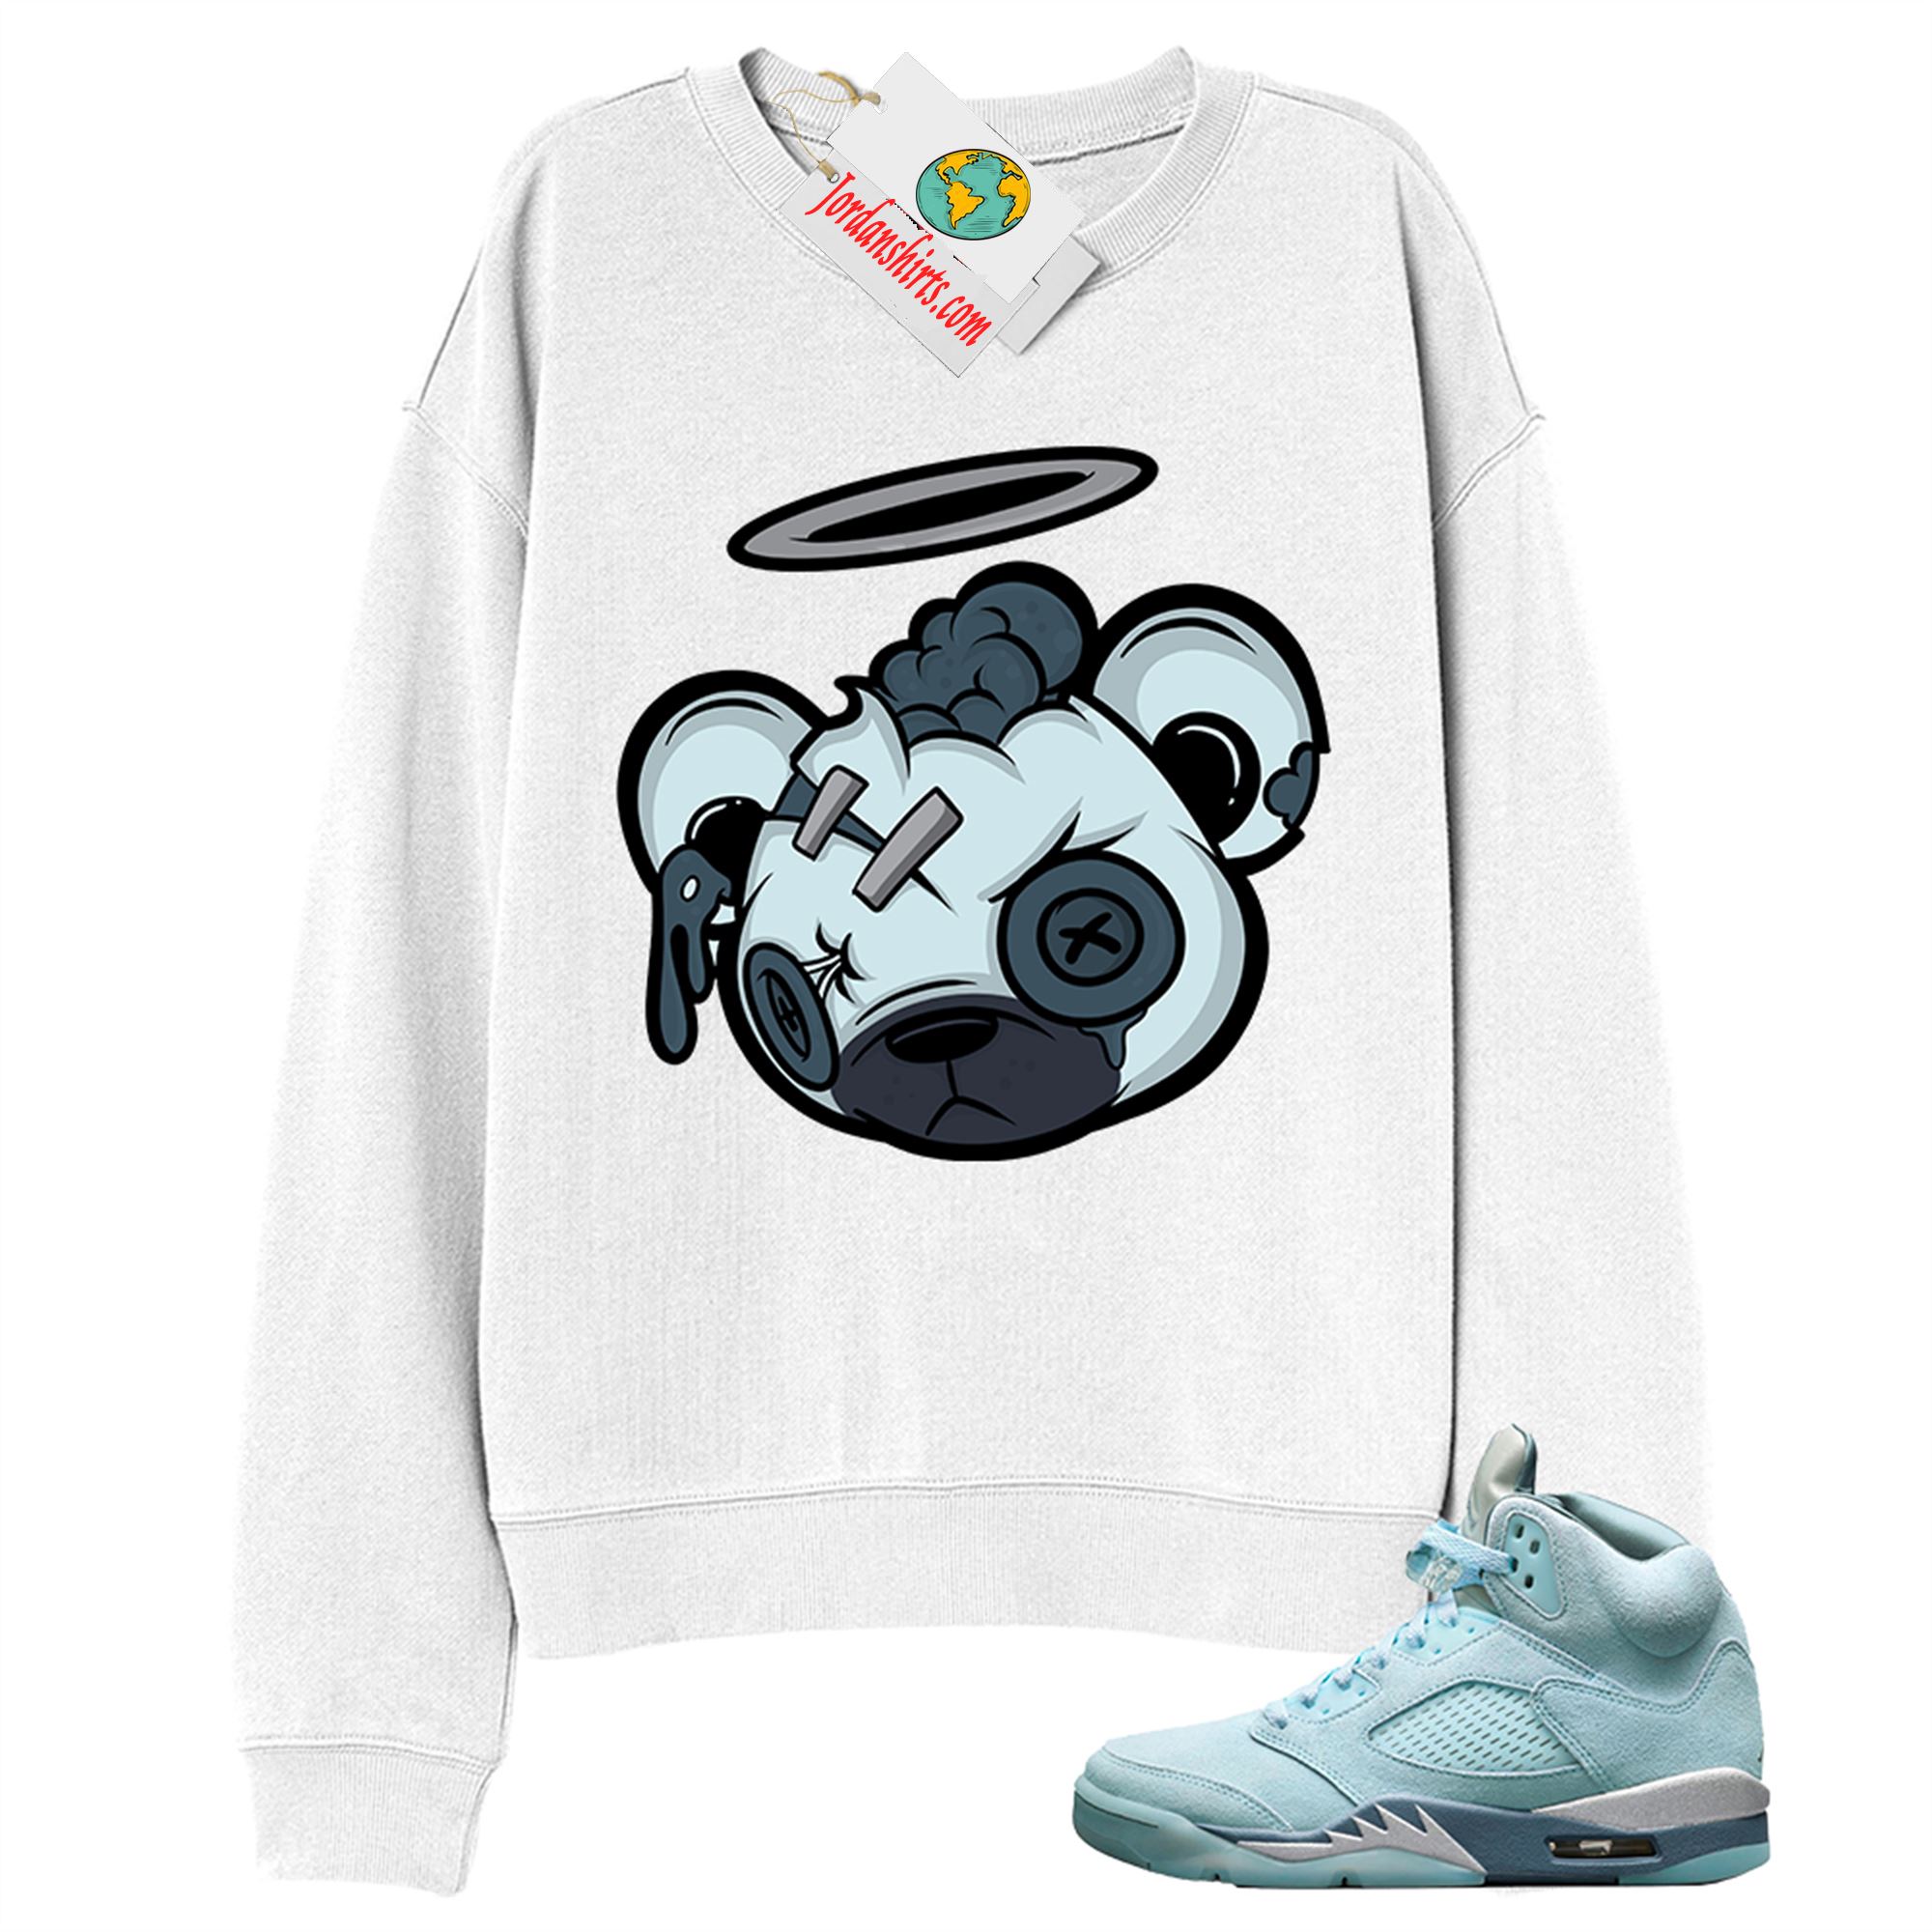 Jordan 5 Sweatshirt, Halo Teddy White Sweatshirt Air Jordan 5 Bluebird 5s Size Up To 5xl